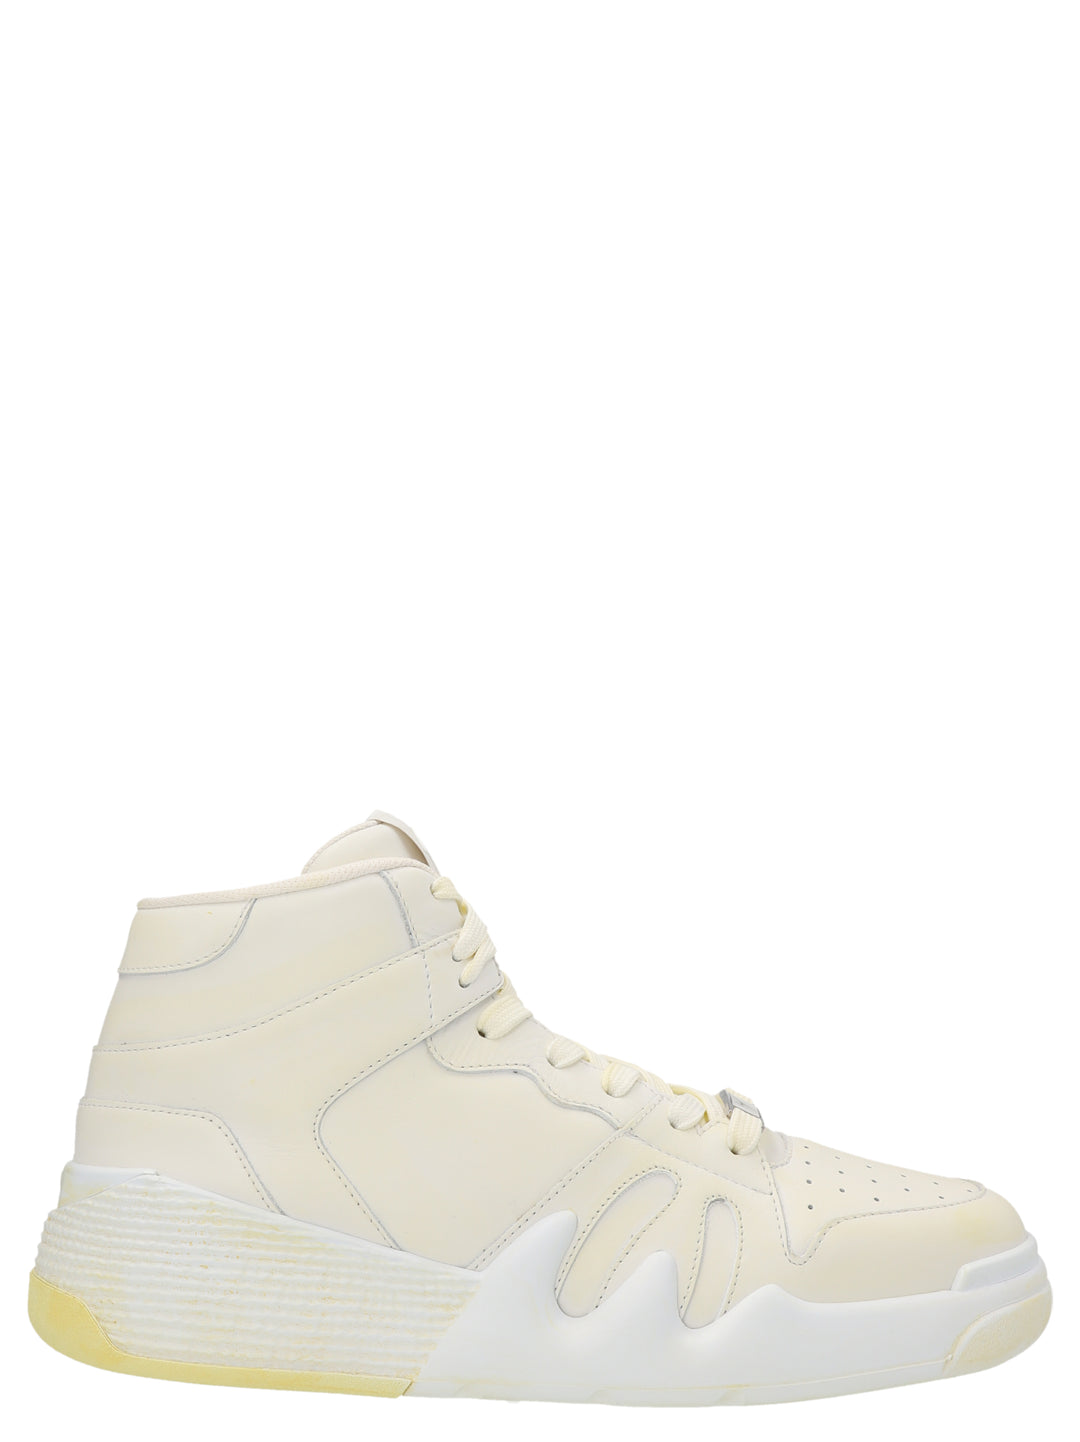 'Taloon mid' Sneakers Bianco